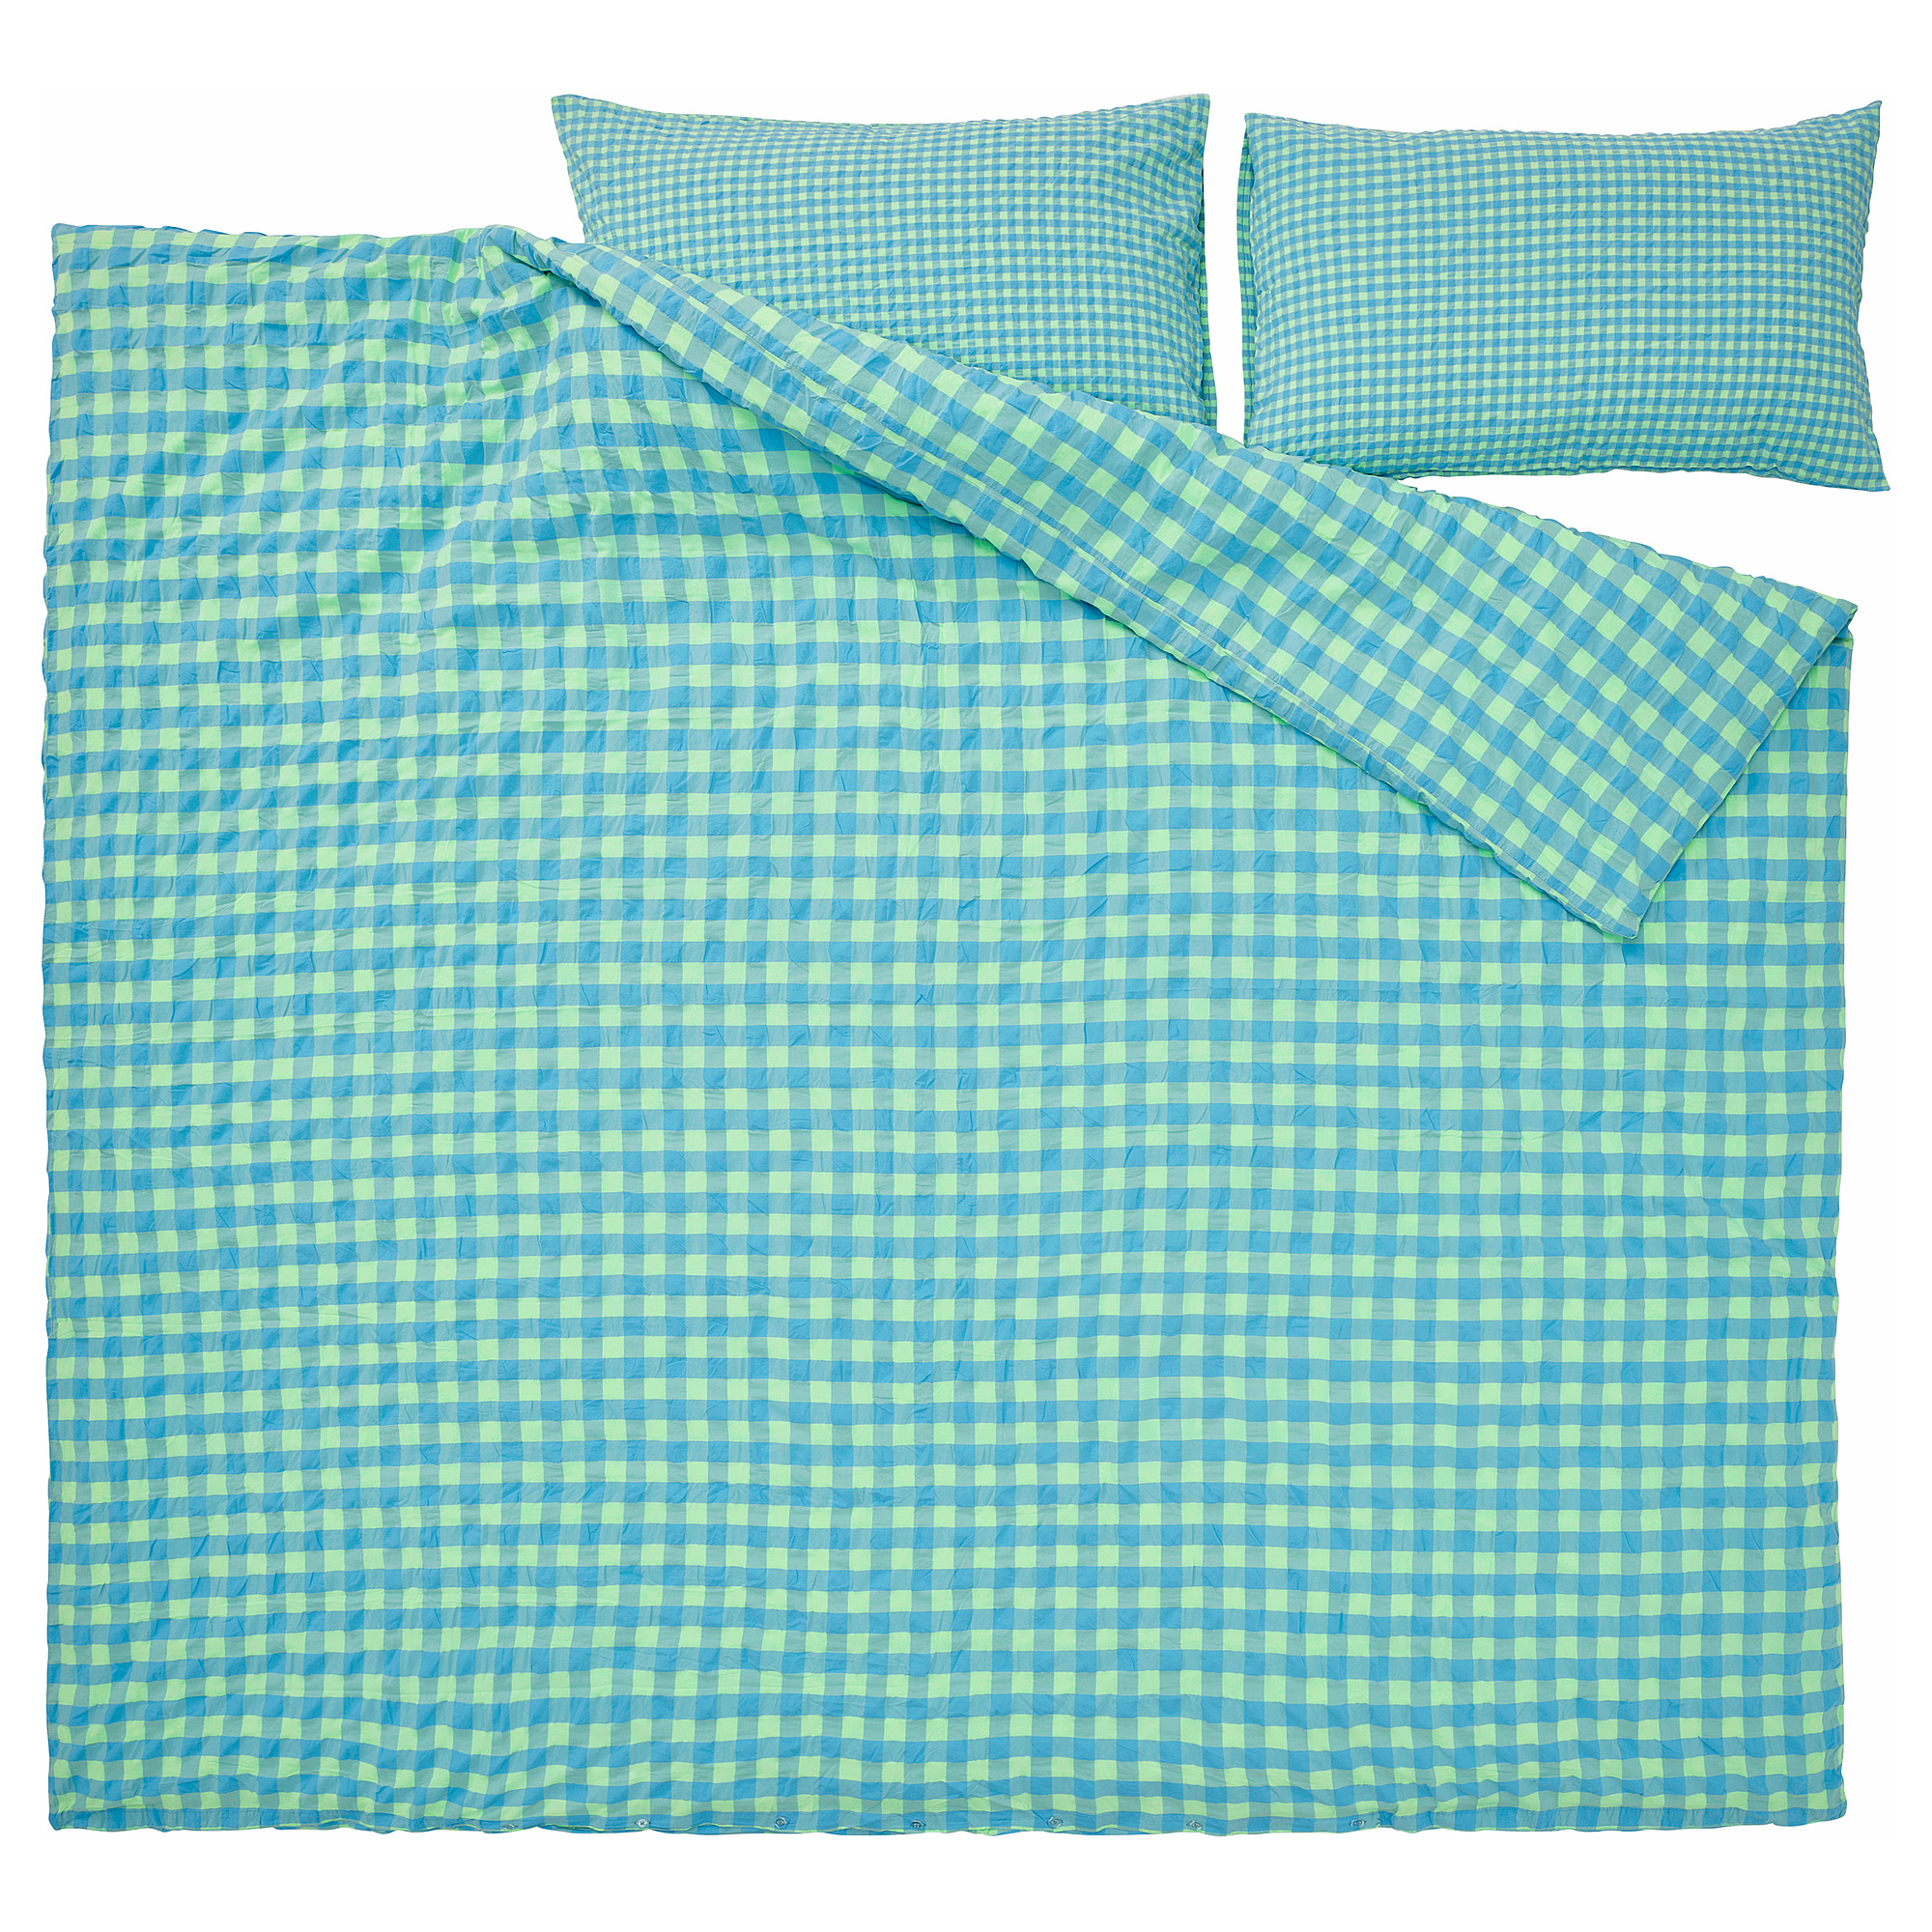 RÅGBLOMMA duvet cover and 2 pillowcases